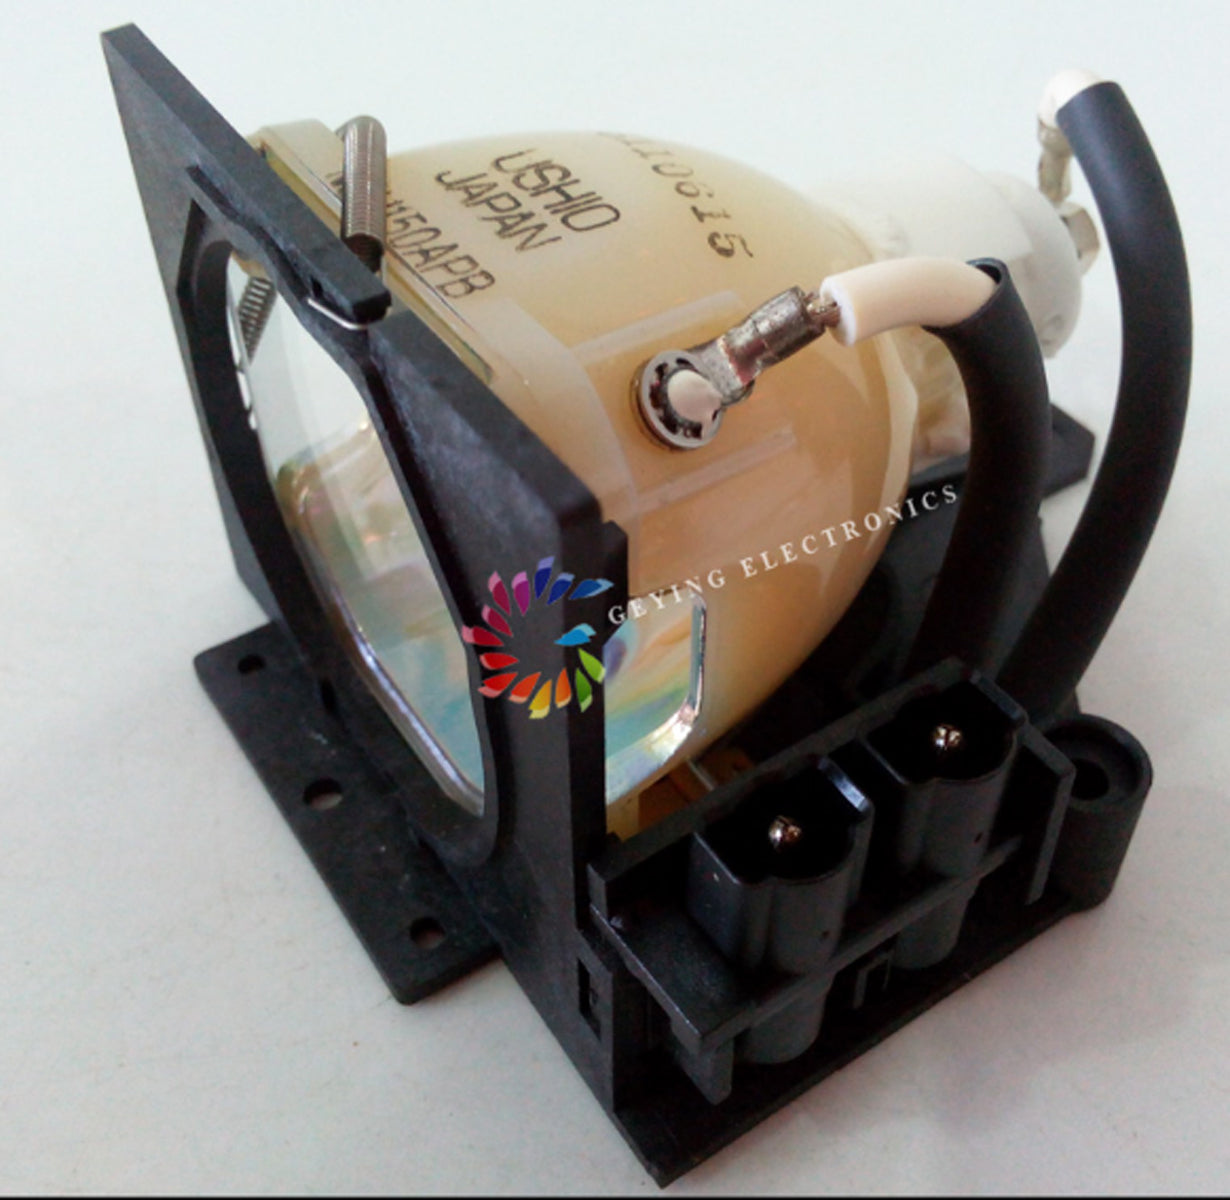 3M 78-6969-9036-1 Ushio Projector Lamp Module